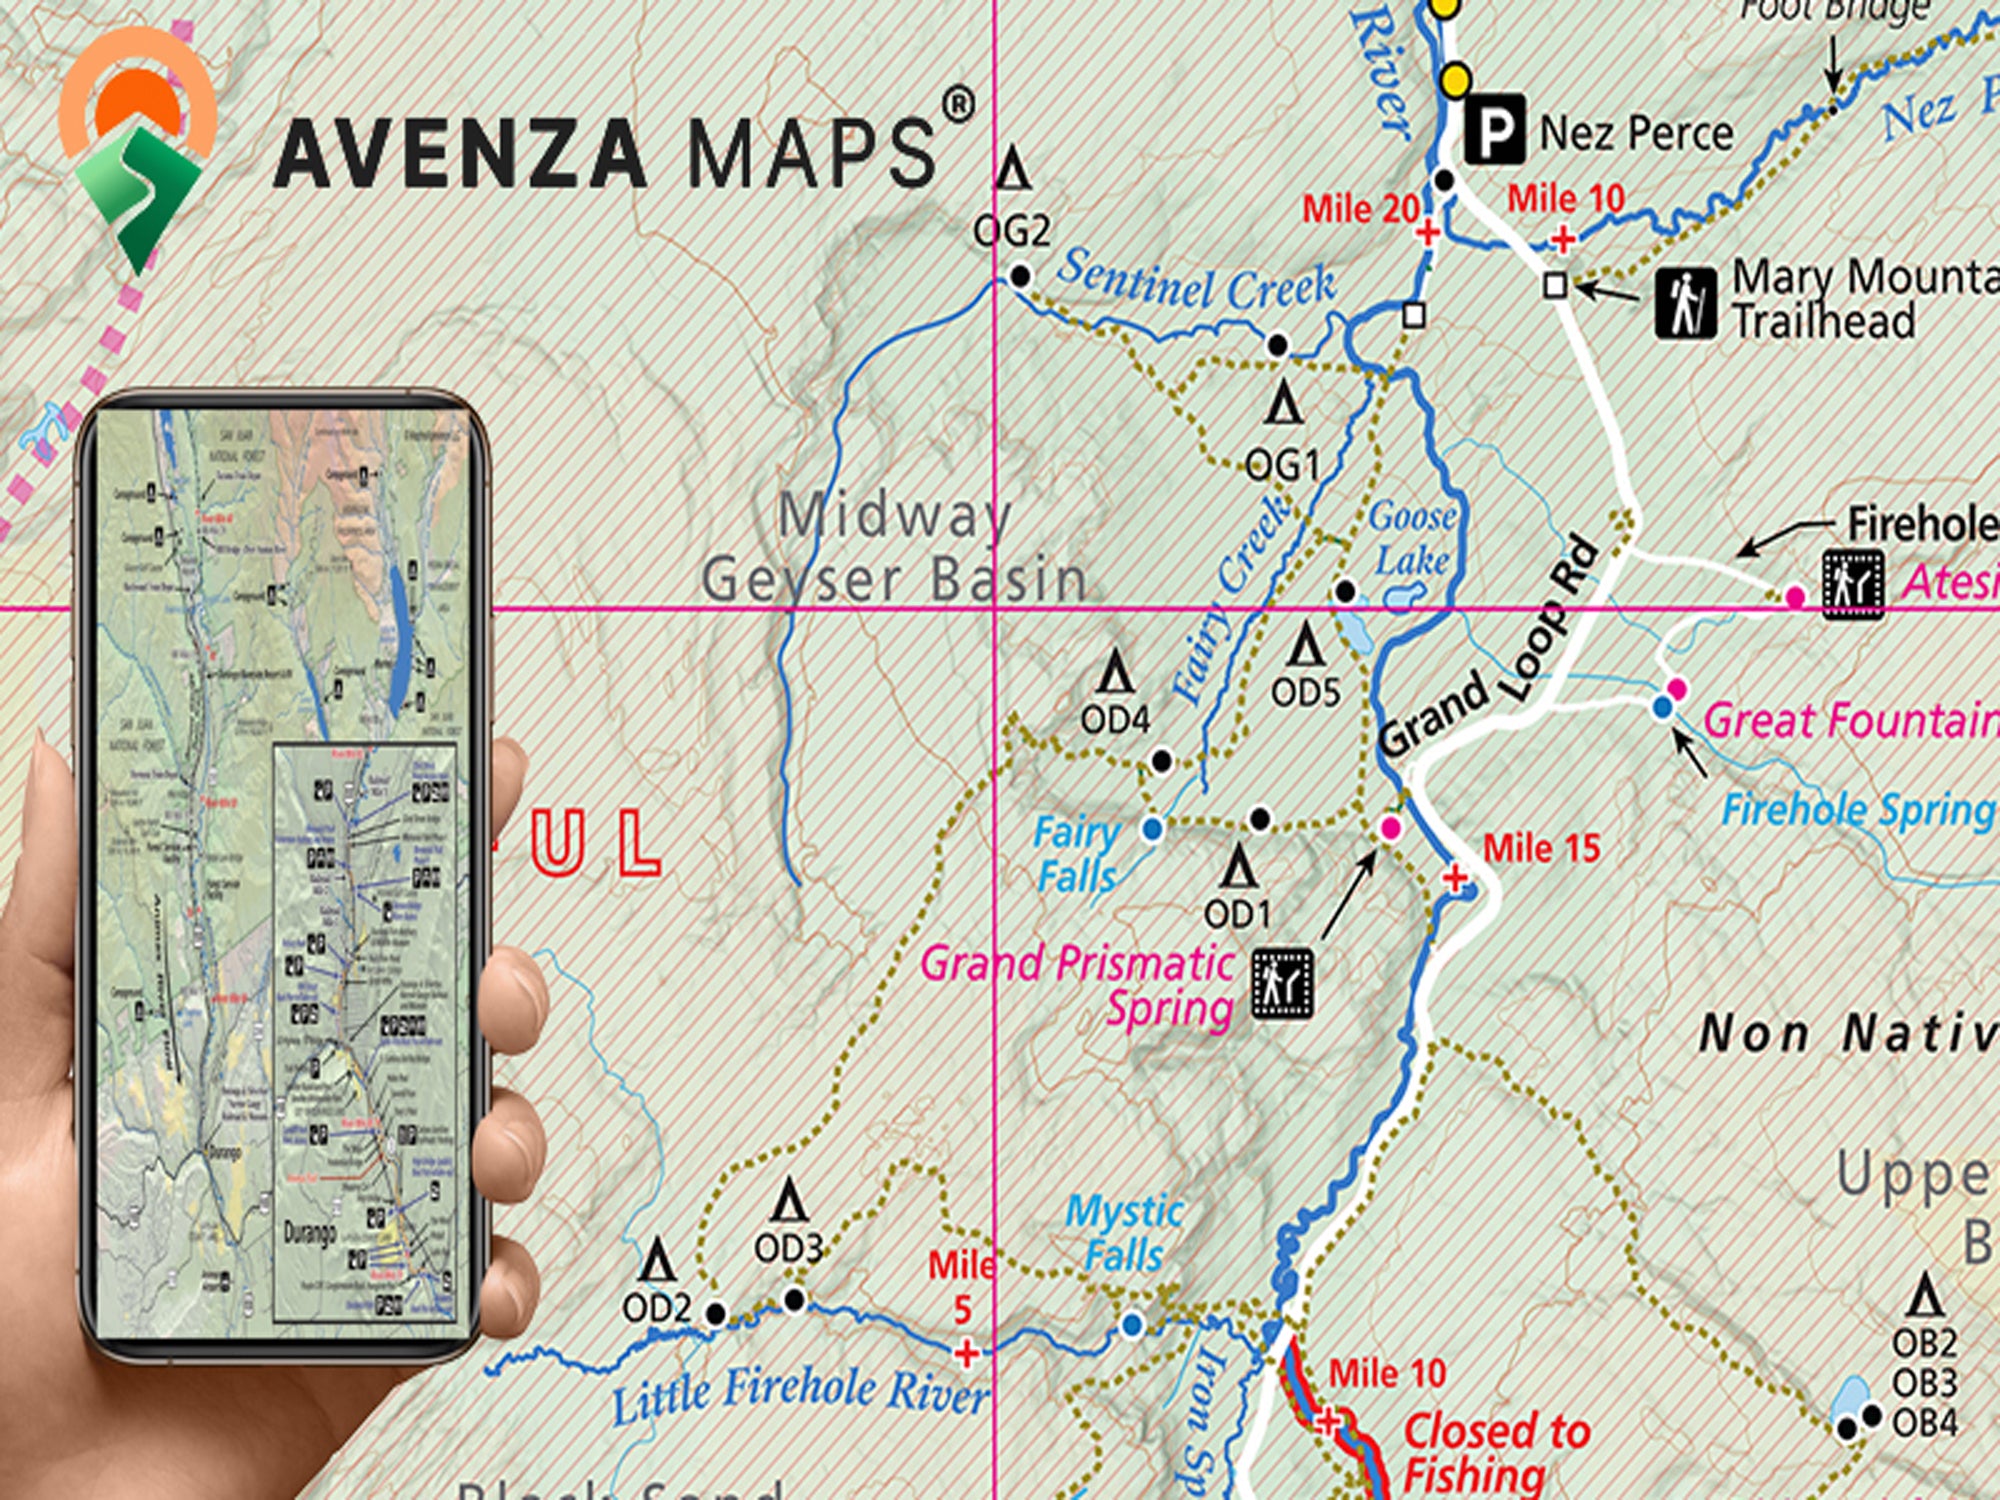 Gunnison River, Colorado Pocket Fishing Map